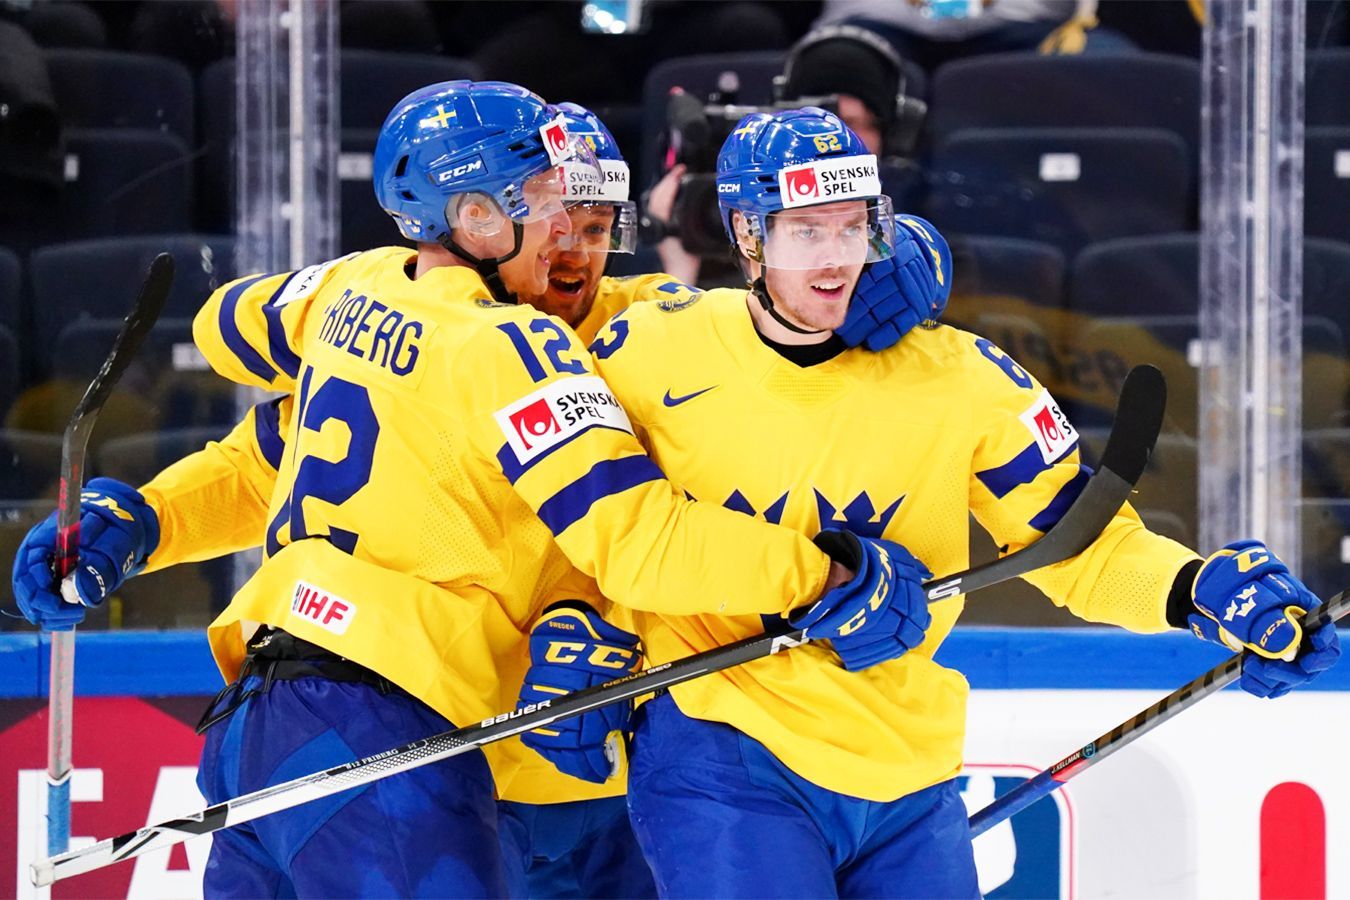 Швеция — Норвегия прогноз на матч 22 мая на ЧМ-2022 по хоккею: ставки и коэффициенты на игру